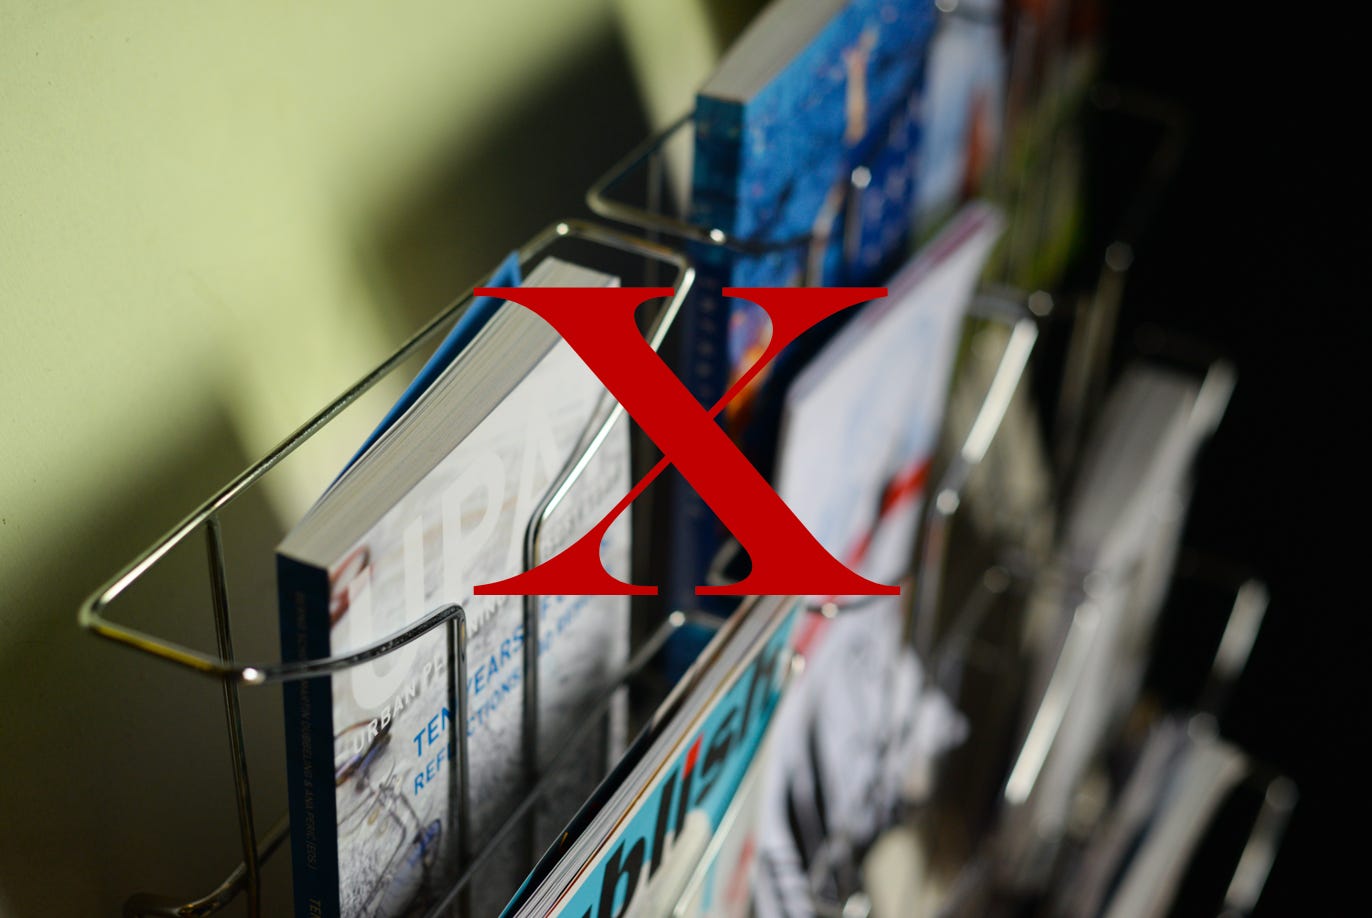 Magazine rack superimposed with X